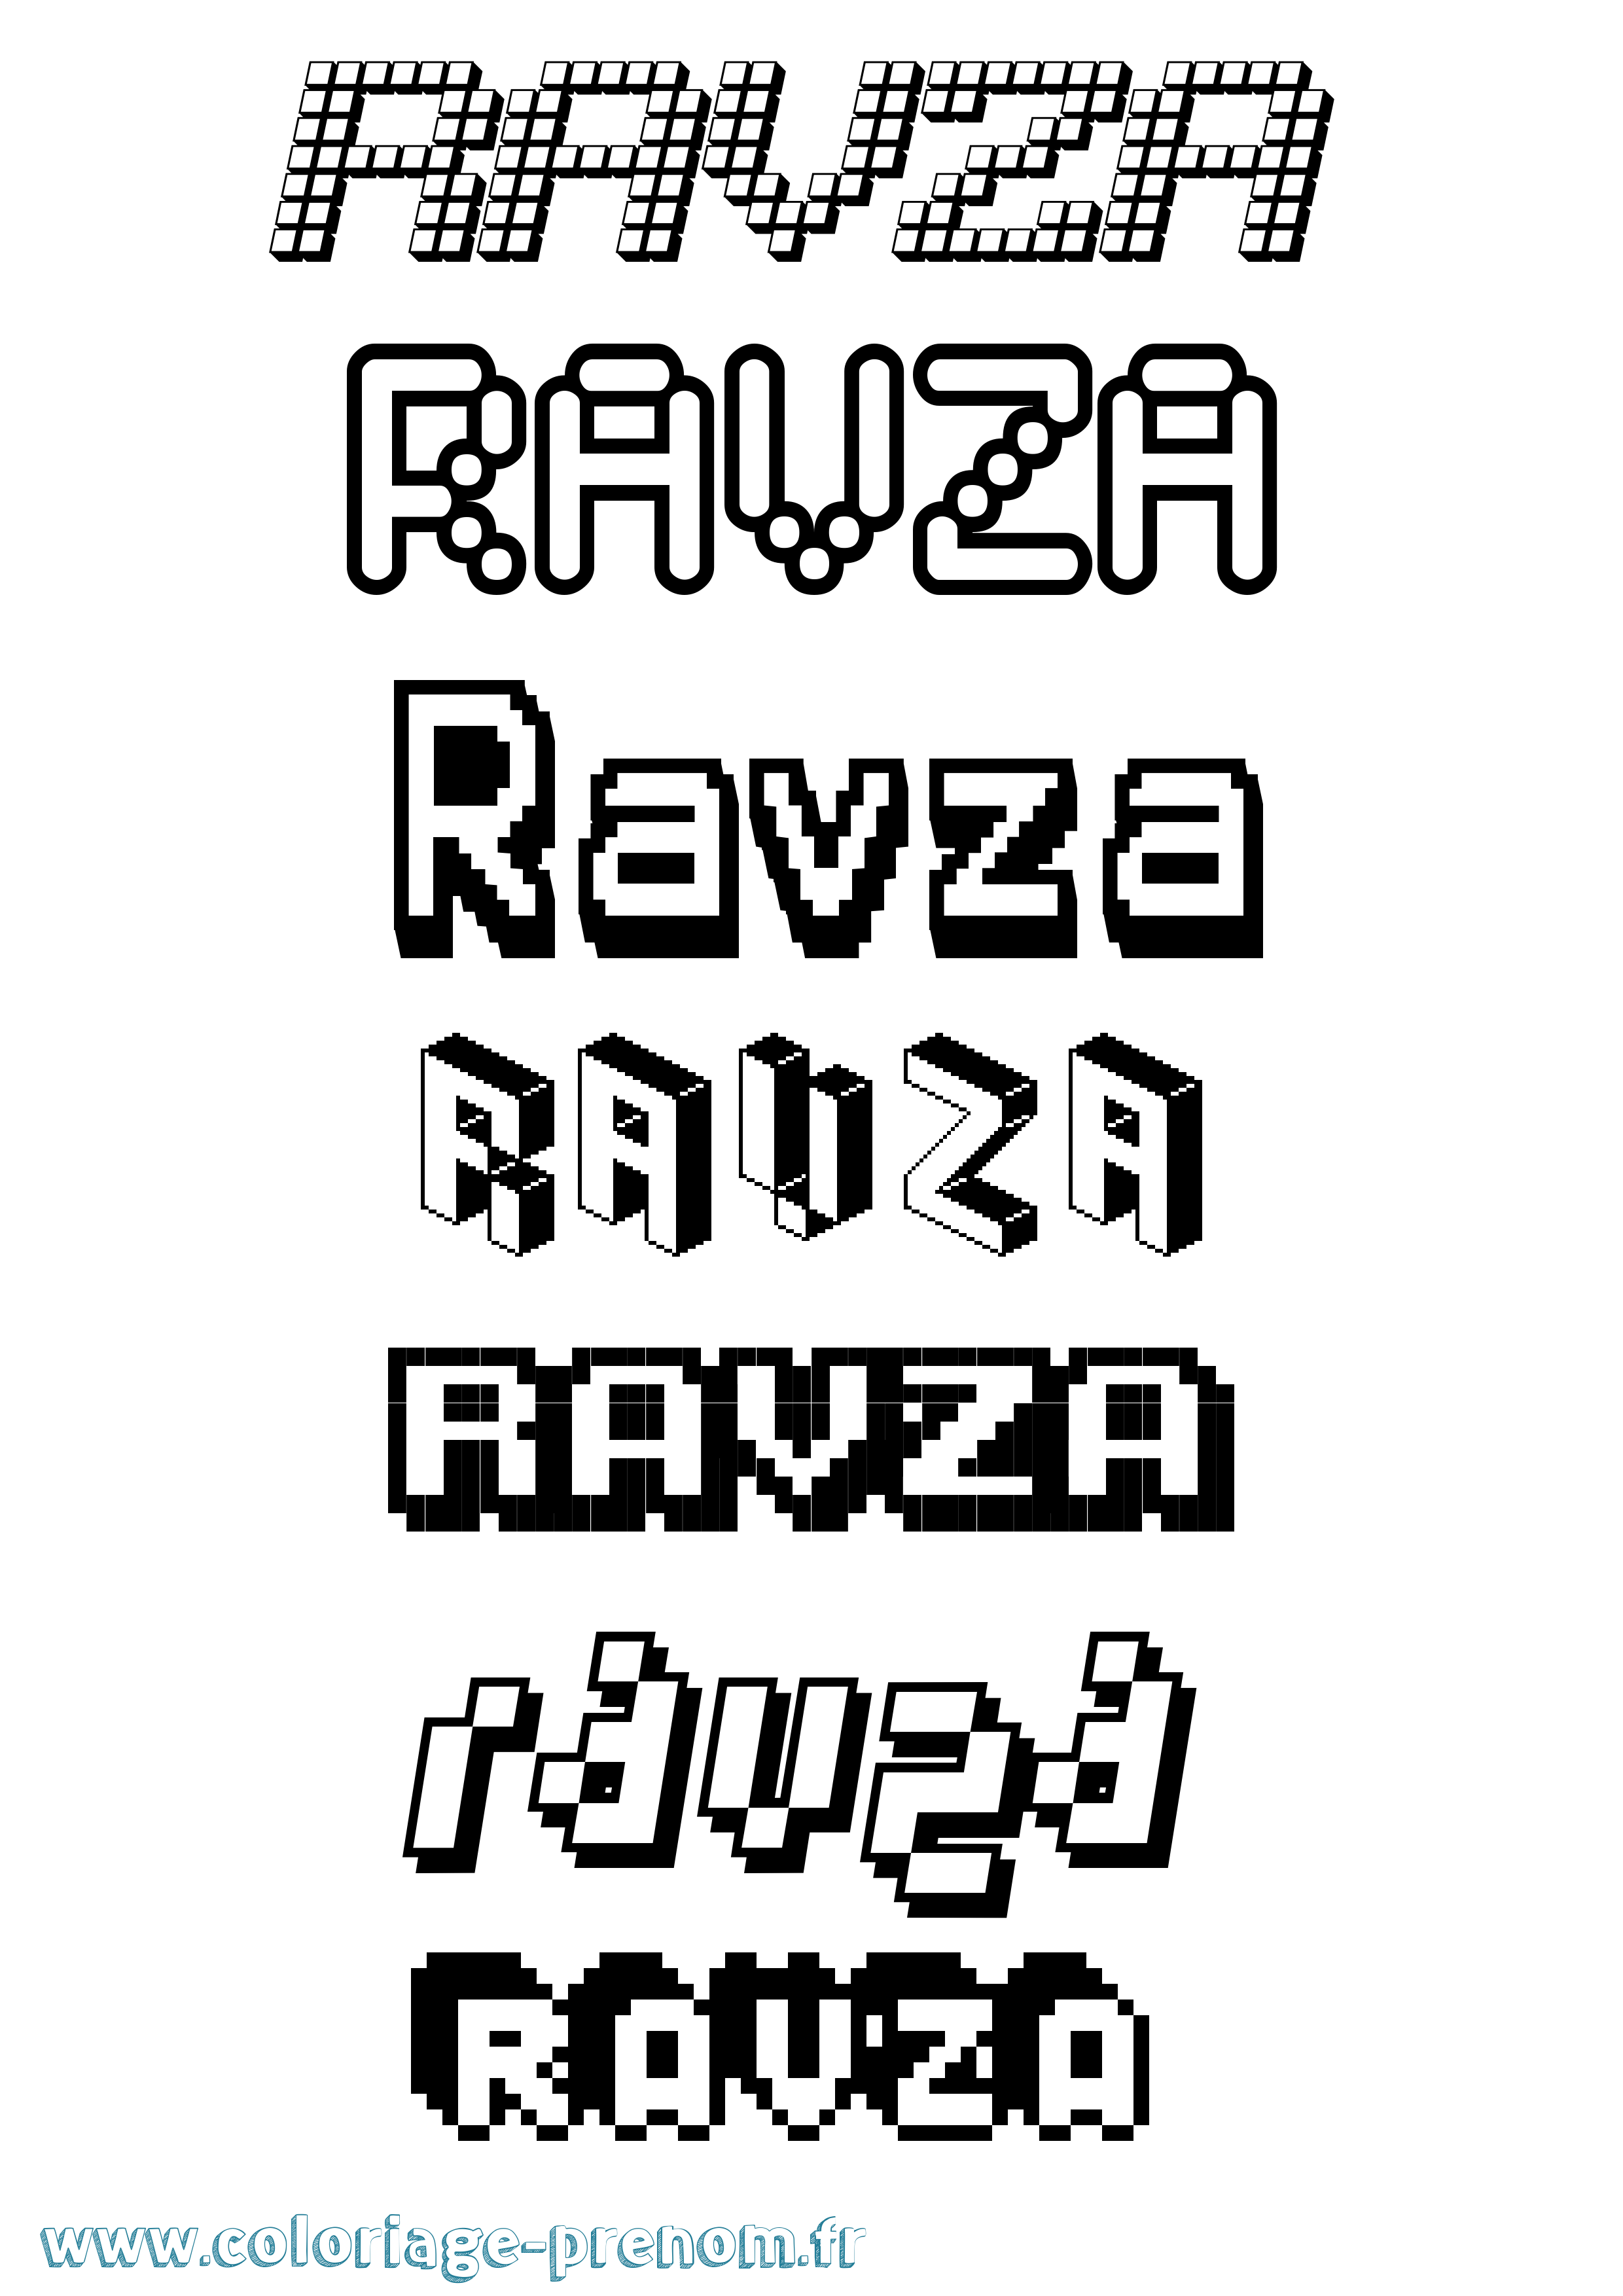 Coloriage prénom Ravza Pixel